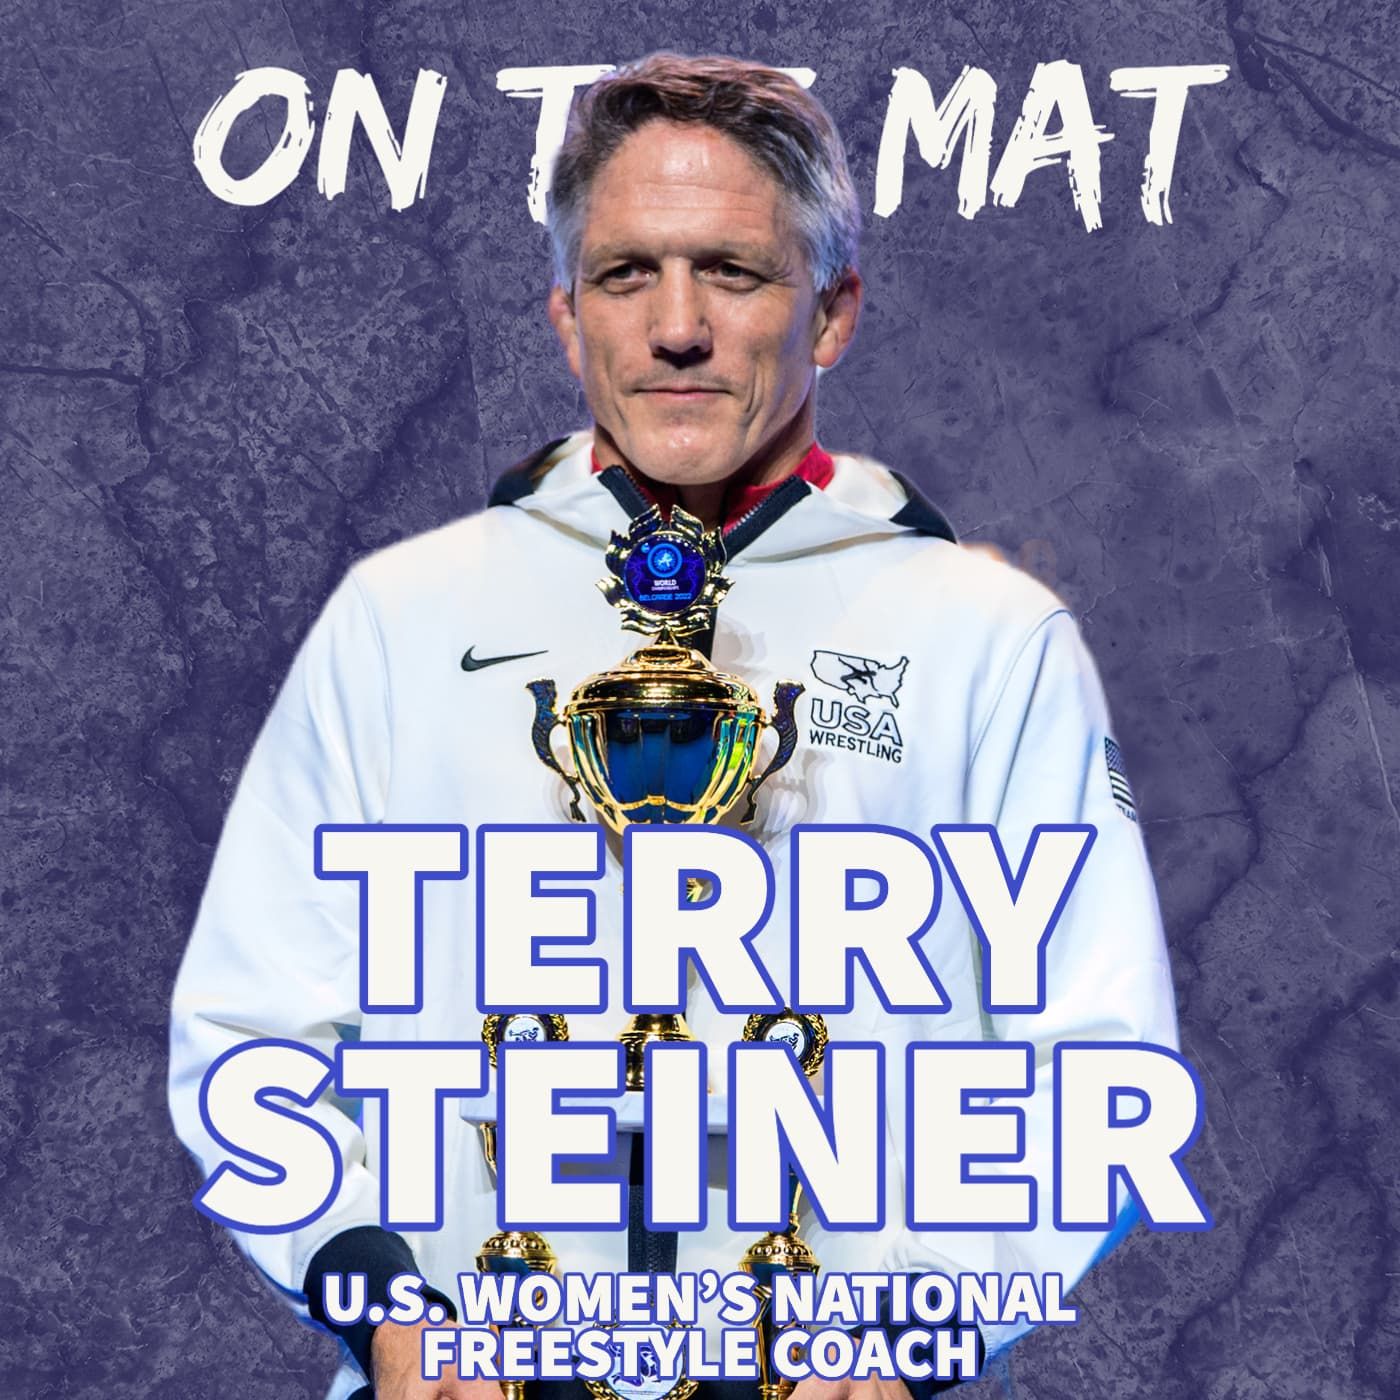 U.S Women’s National Freestyle Coach Terry Steiner - OTM654